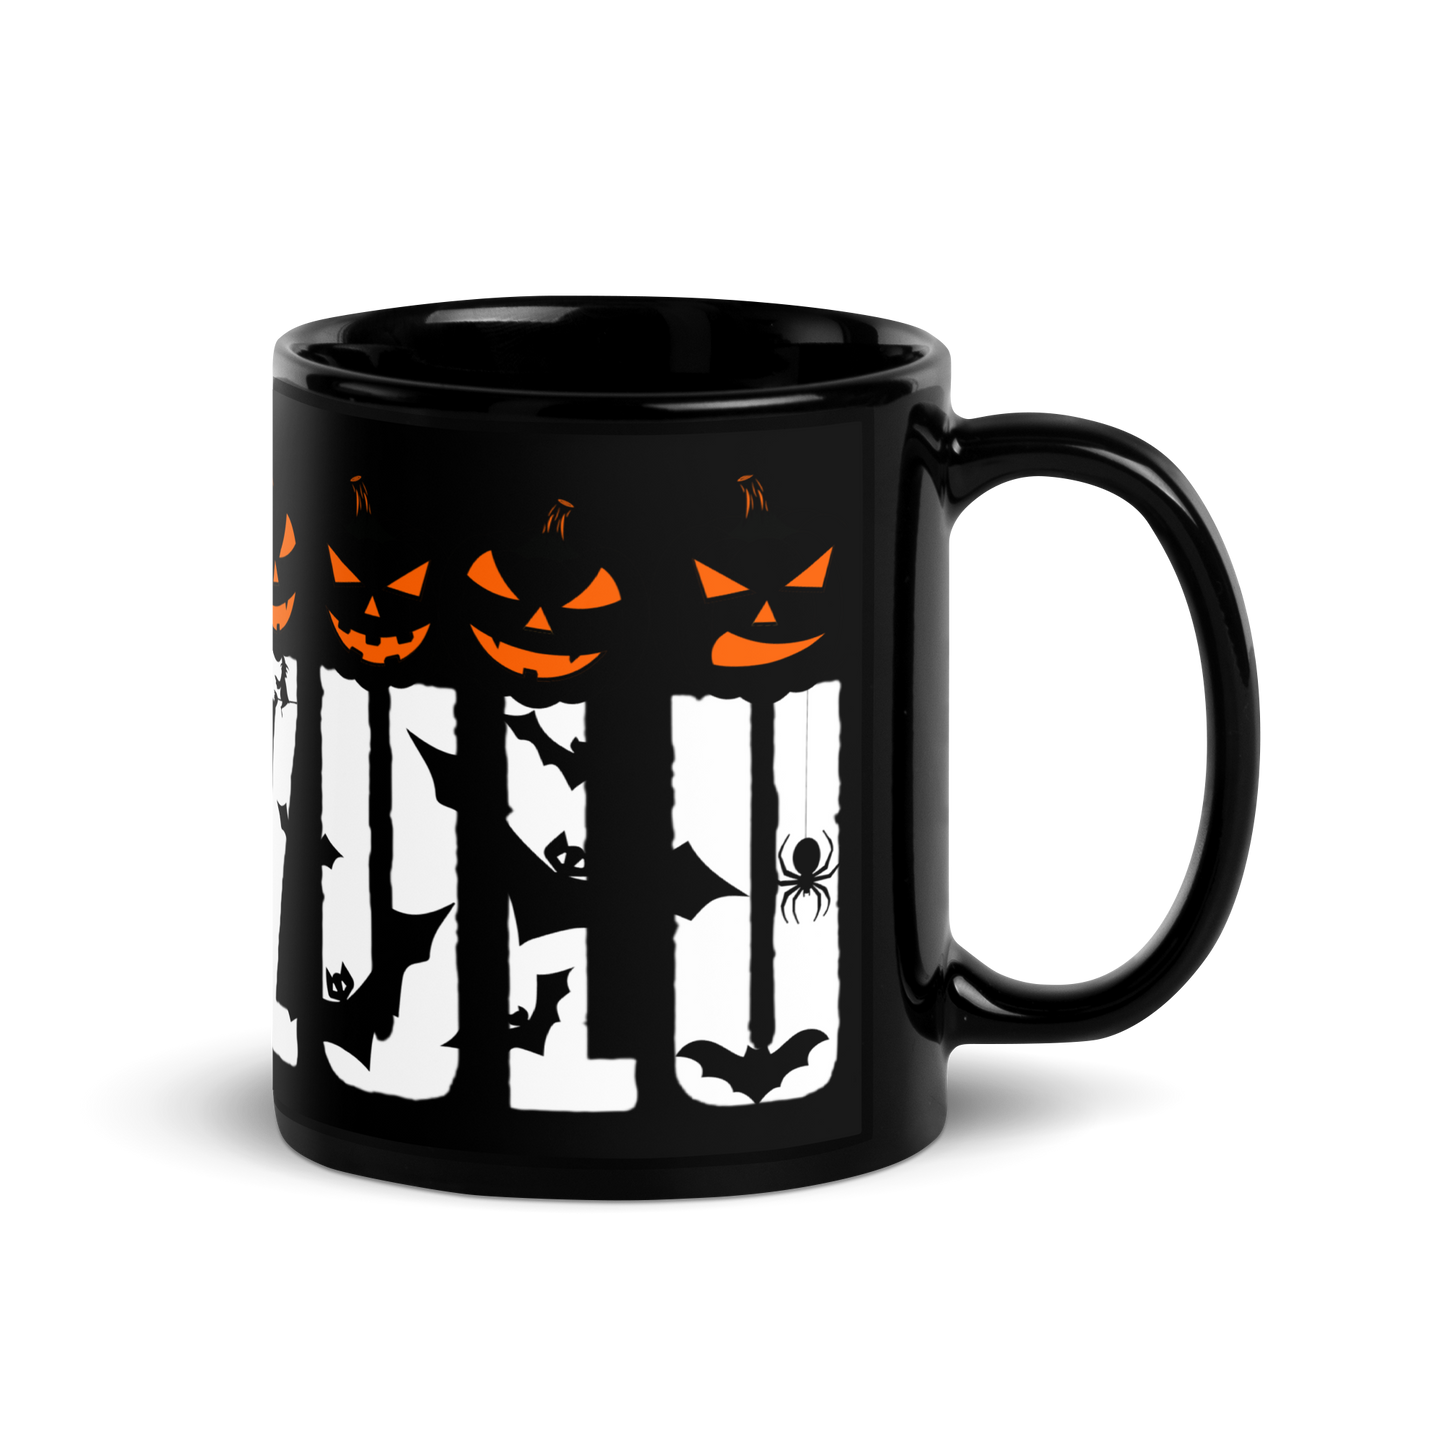 ZULU Limited Edition Halloween (Black Mug)